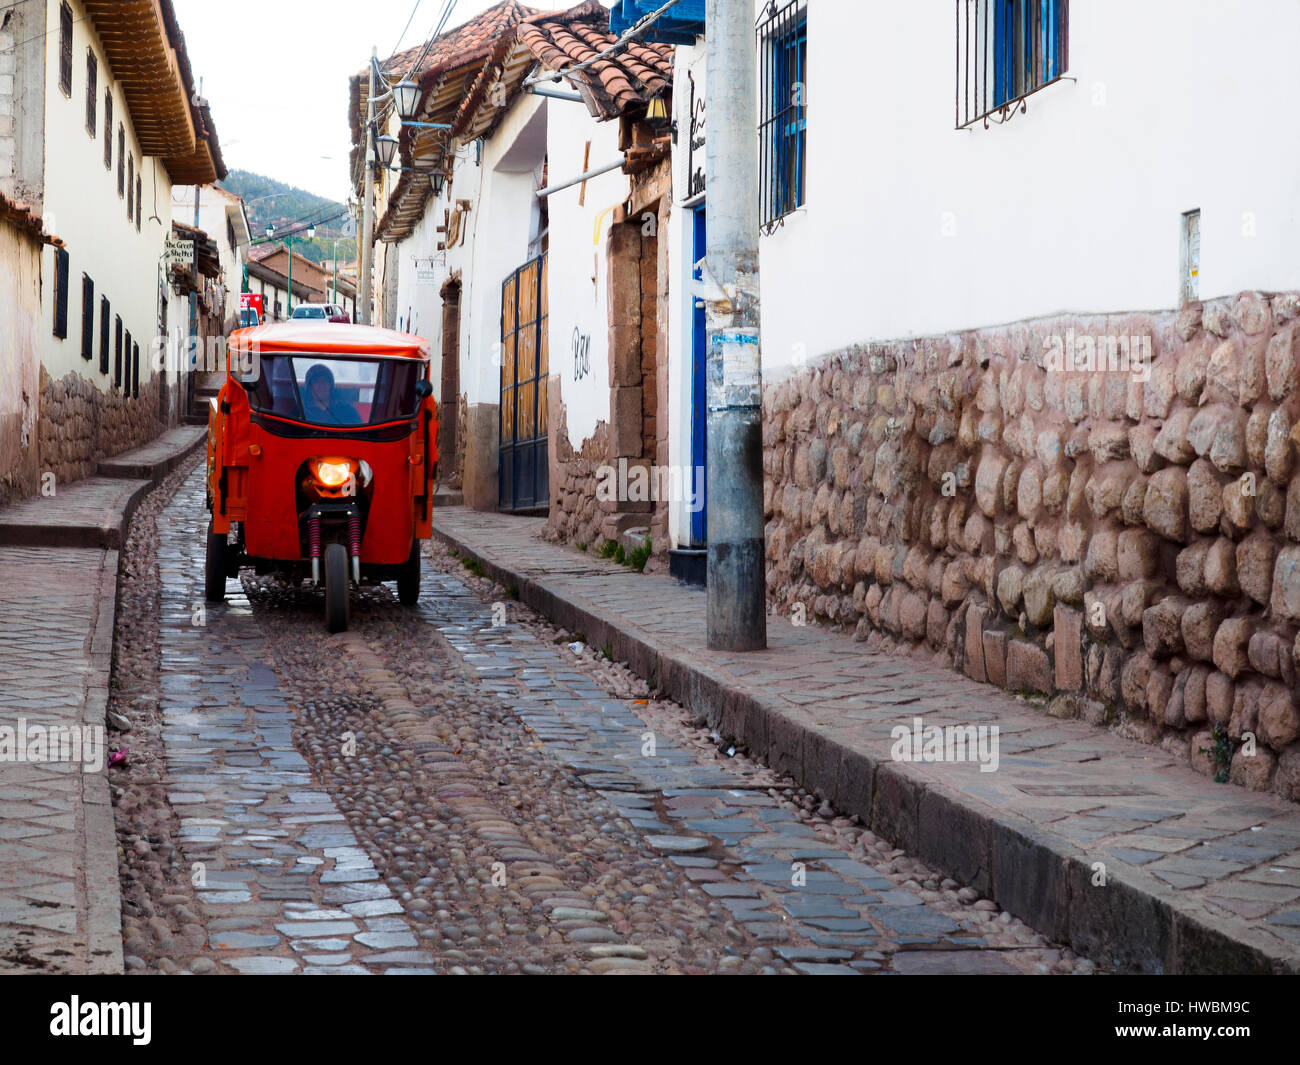 three wheel vehicle - Cusco, Peru Stock Photo